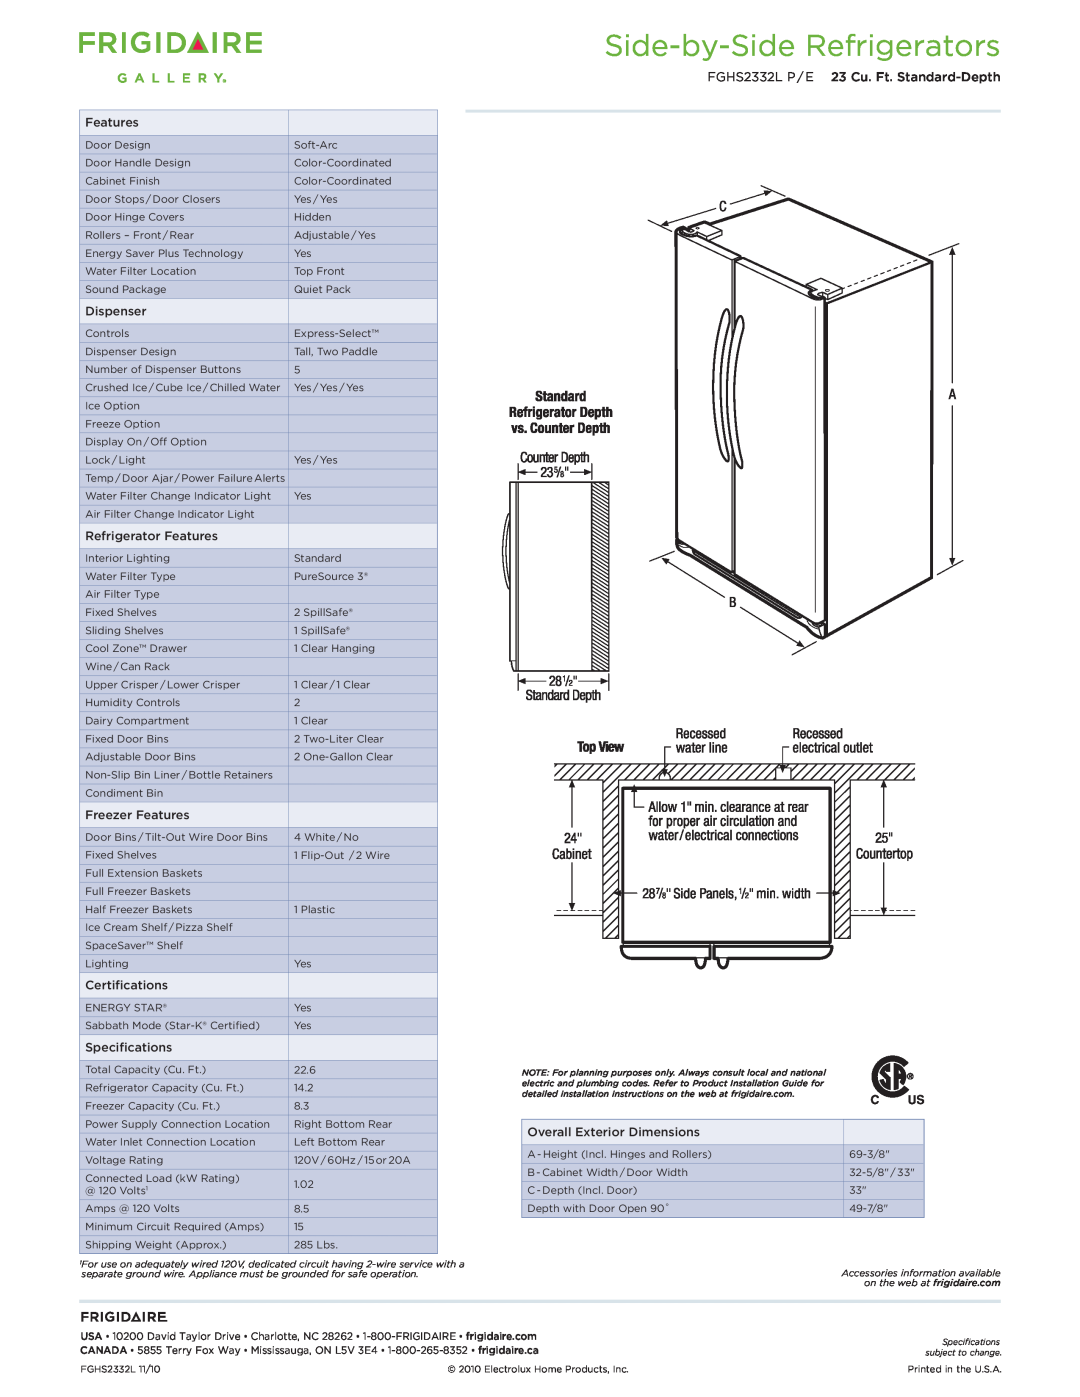 Frigidaire FGHS2332L P/E dimensions Side-by-SideRefrigerators, FGHS2332L P / E 23 Cu. Ft. Standard-Depth 